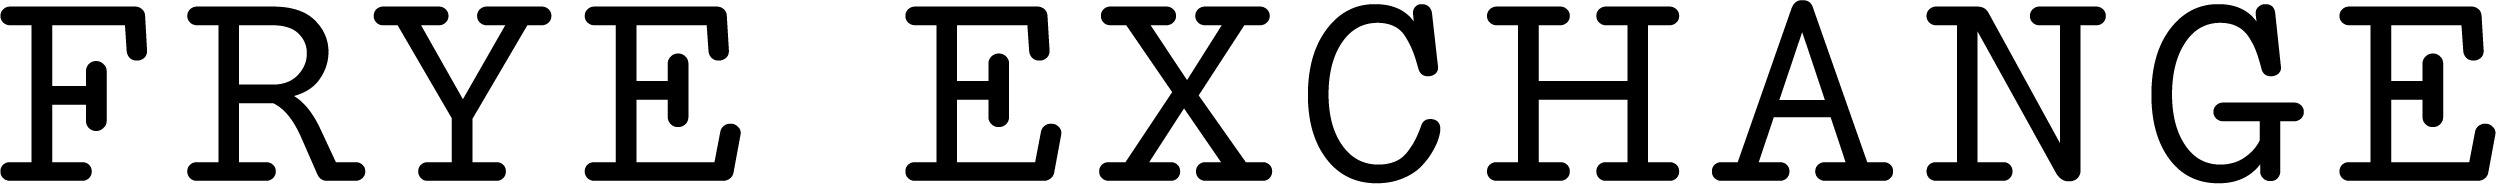 Frye Company Logo